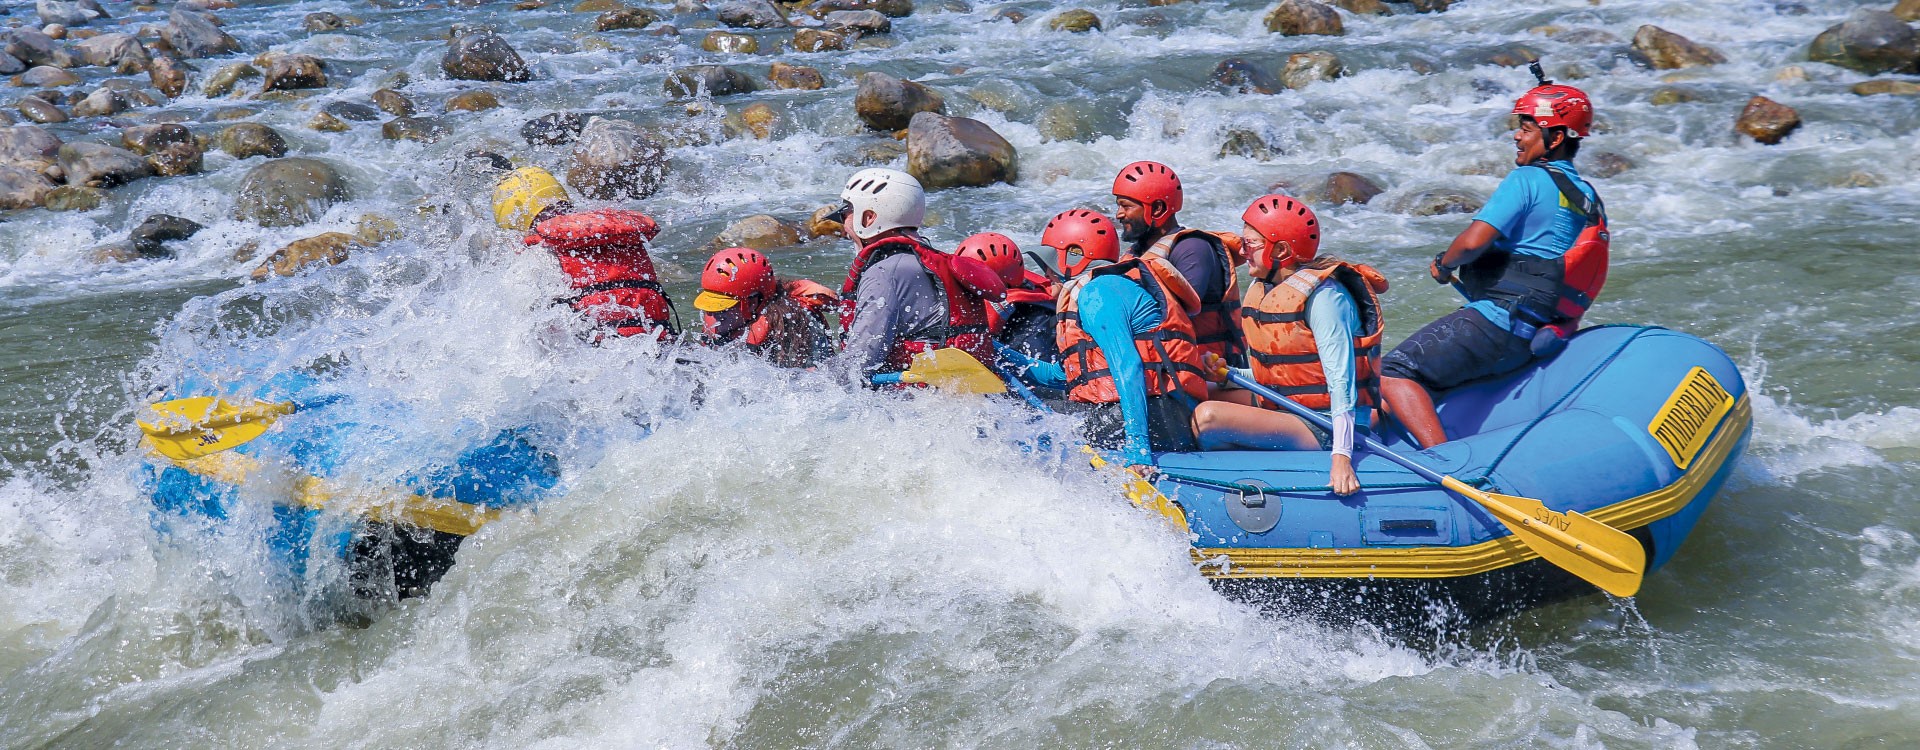 1683978480.Kali-Gandaki-River-Rafting.jpg